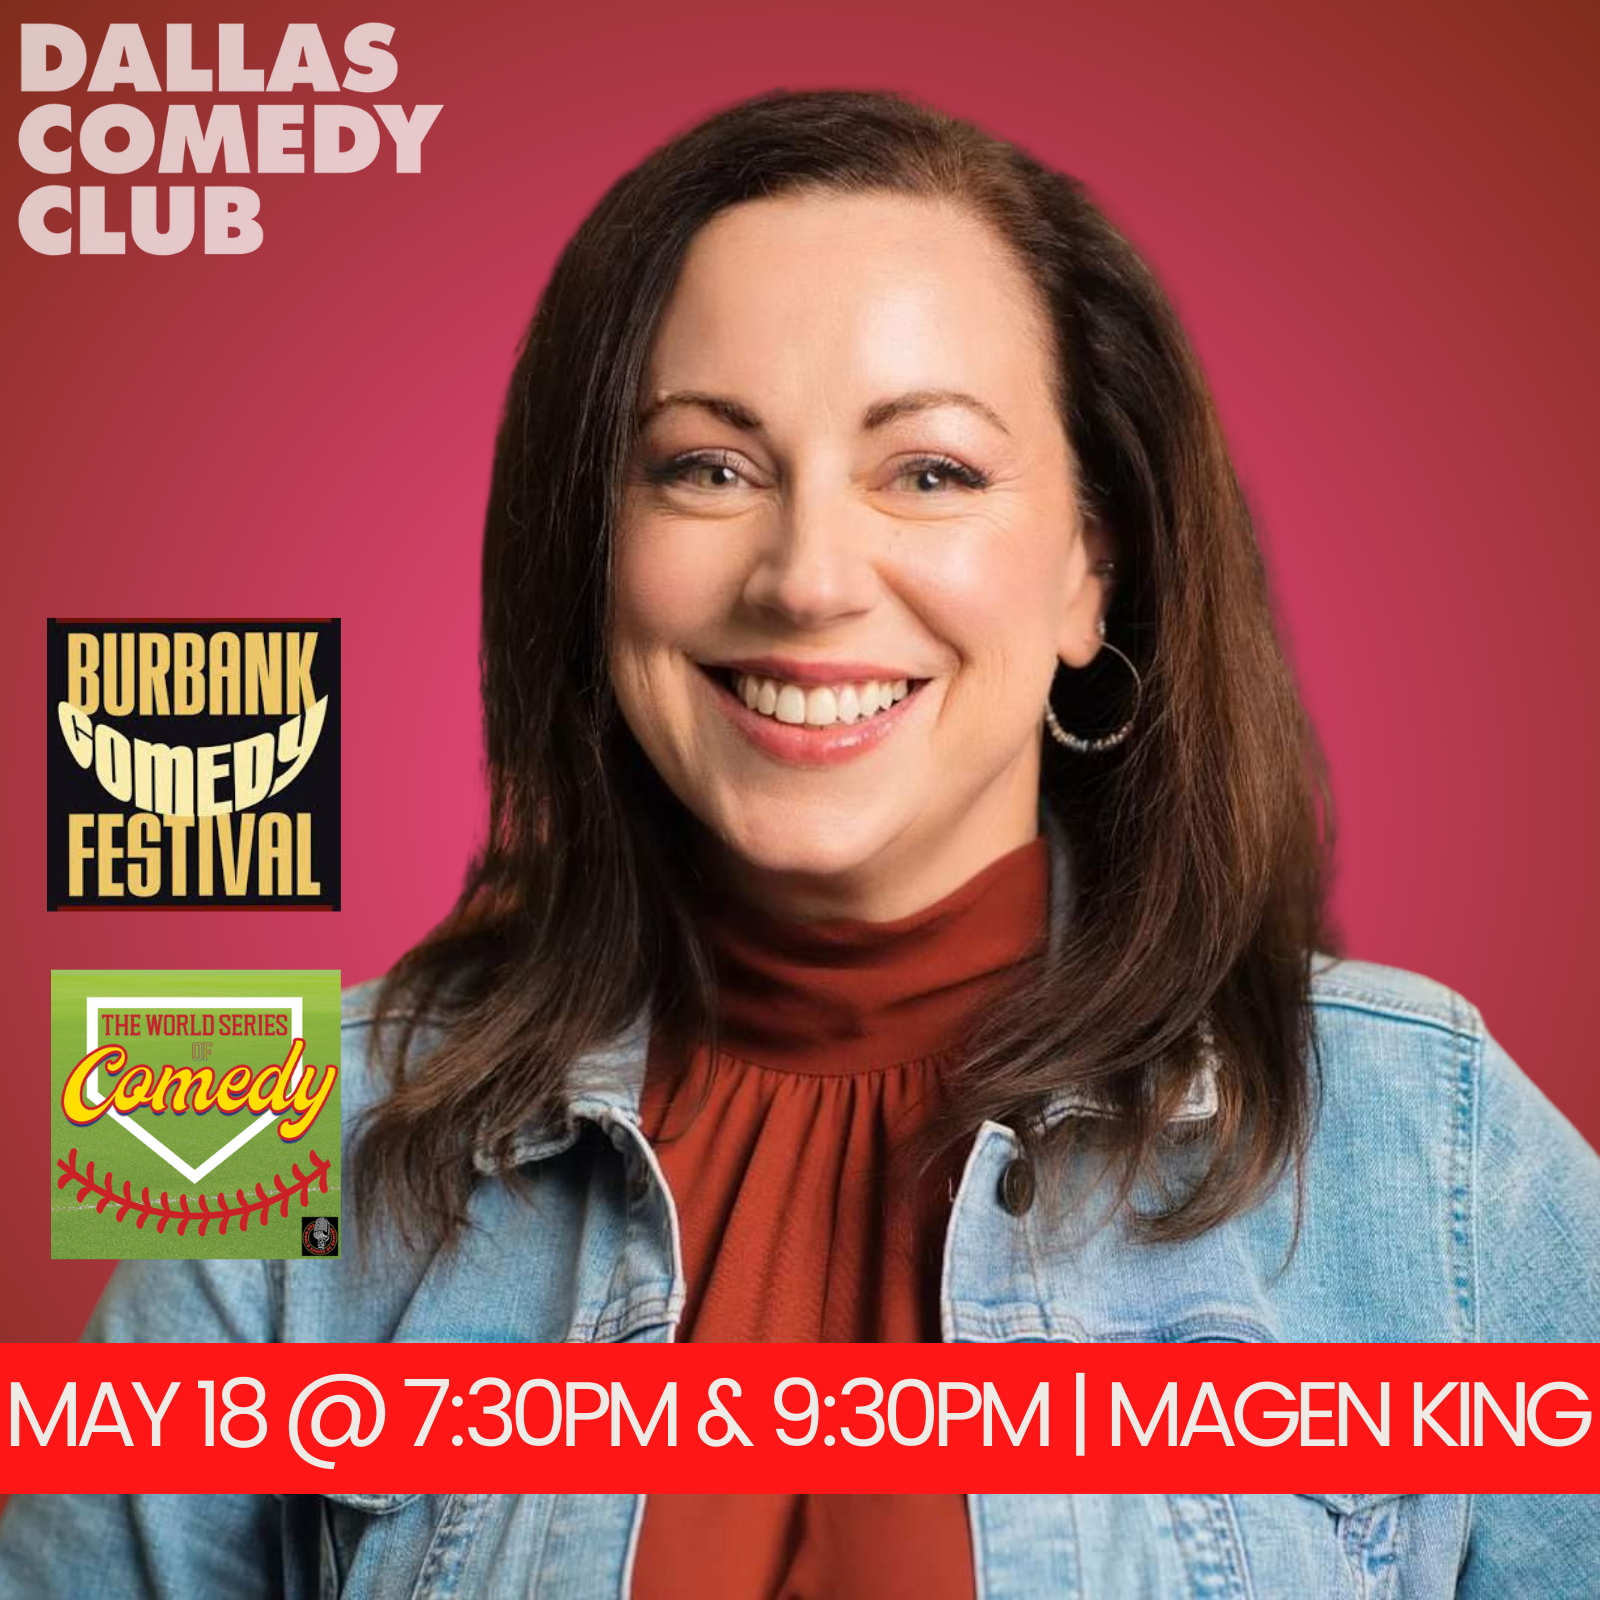 Magen King at Dallas Comedy Club